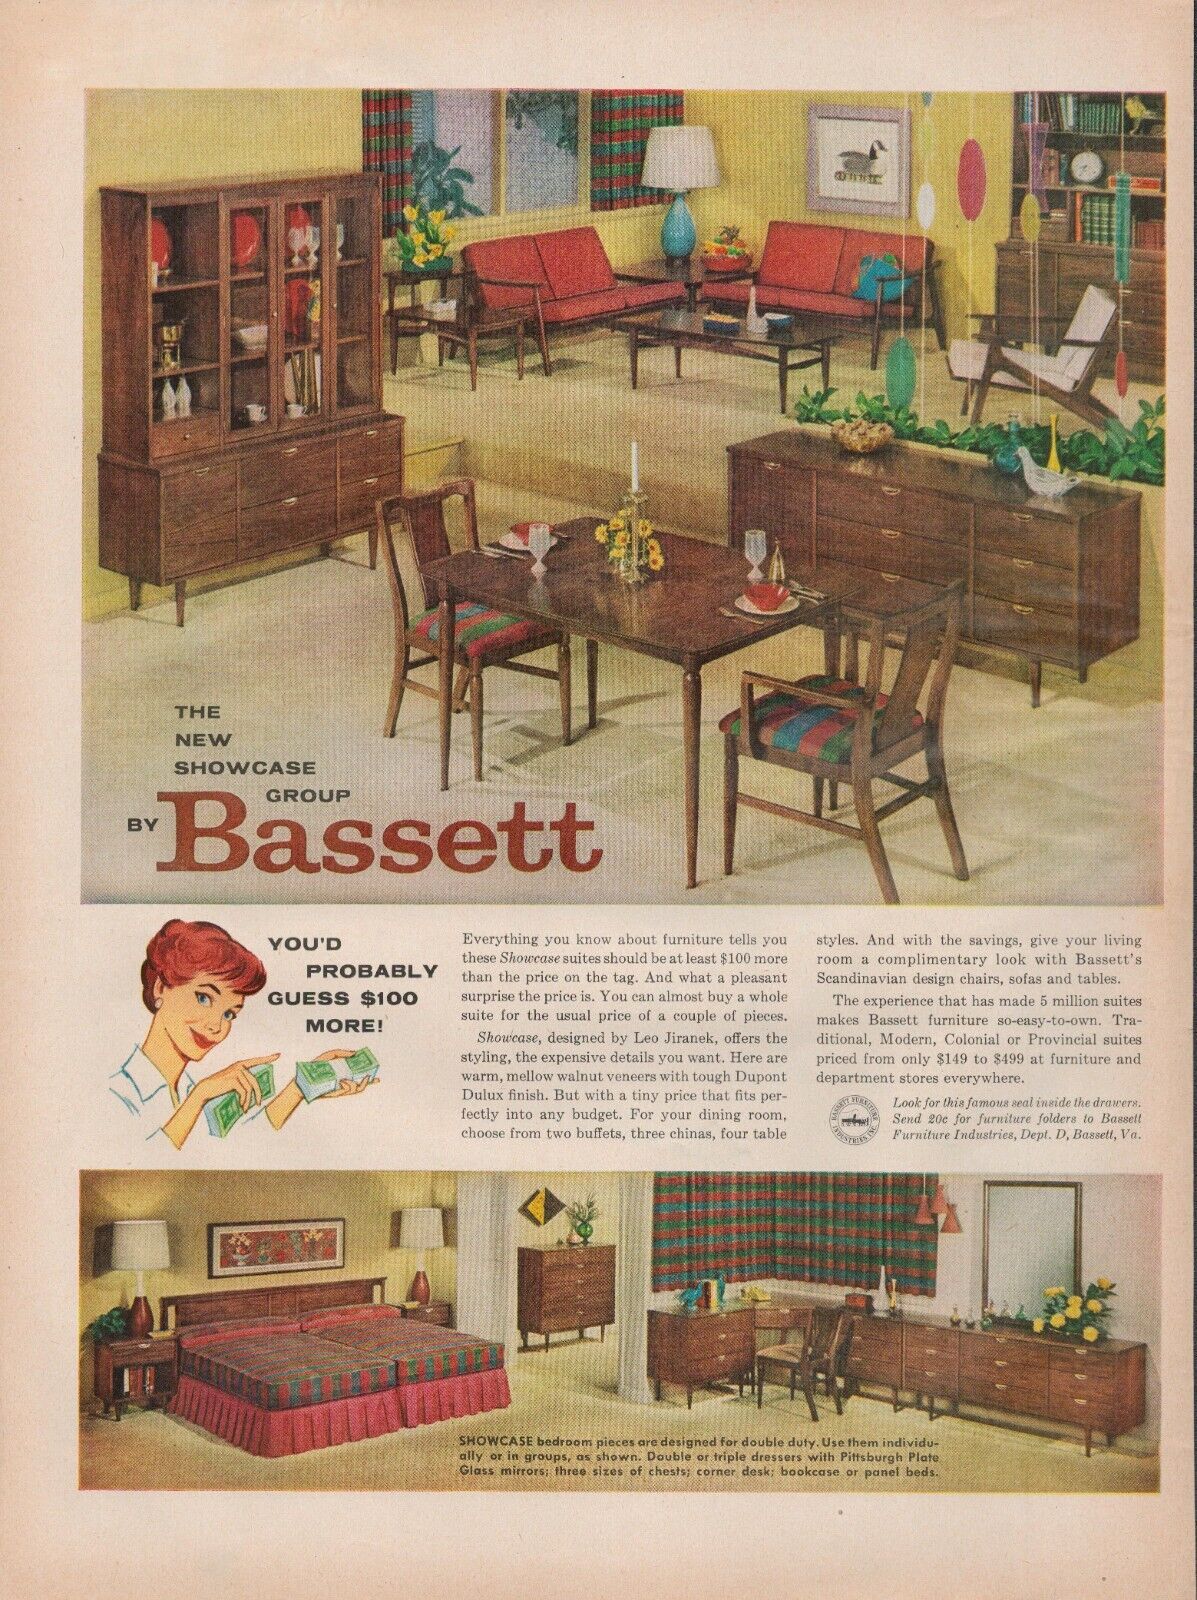 1959 Bassett Funiture New Showcase Group Design By Leo Jiranek Vintage Print Ad